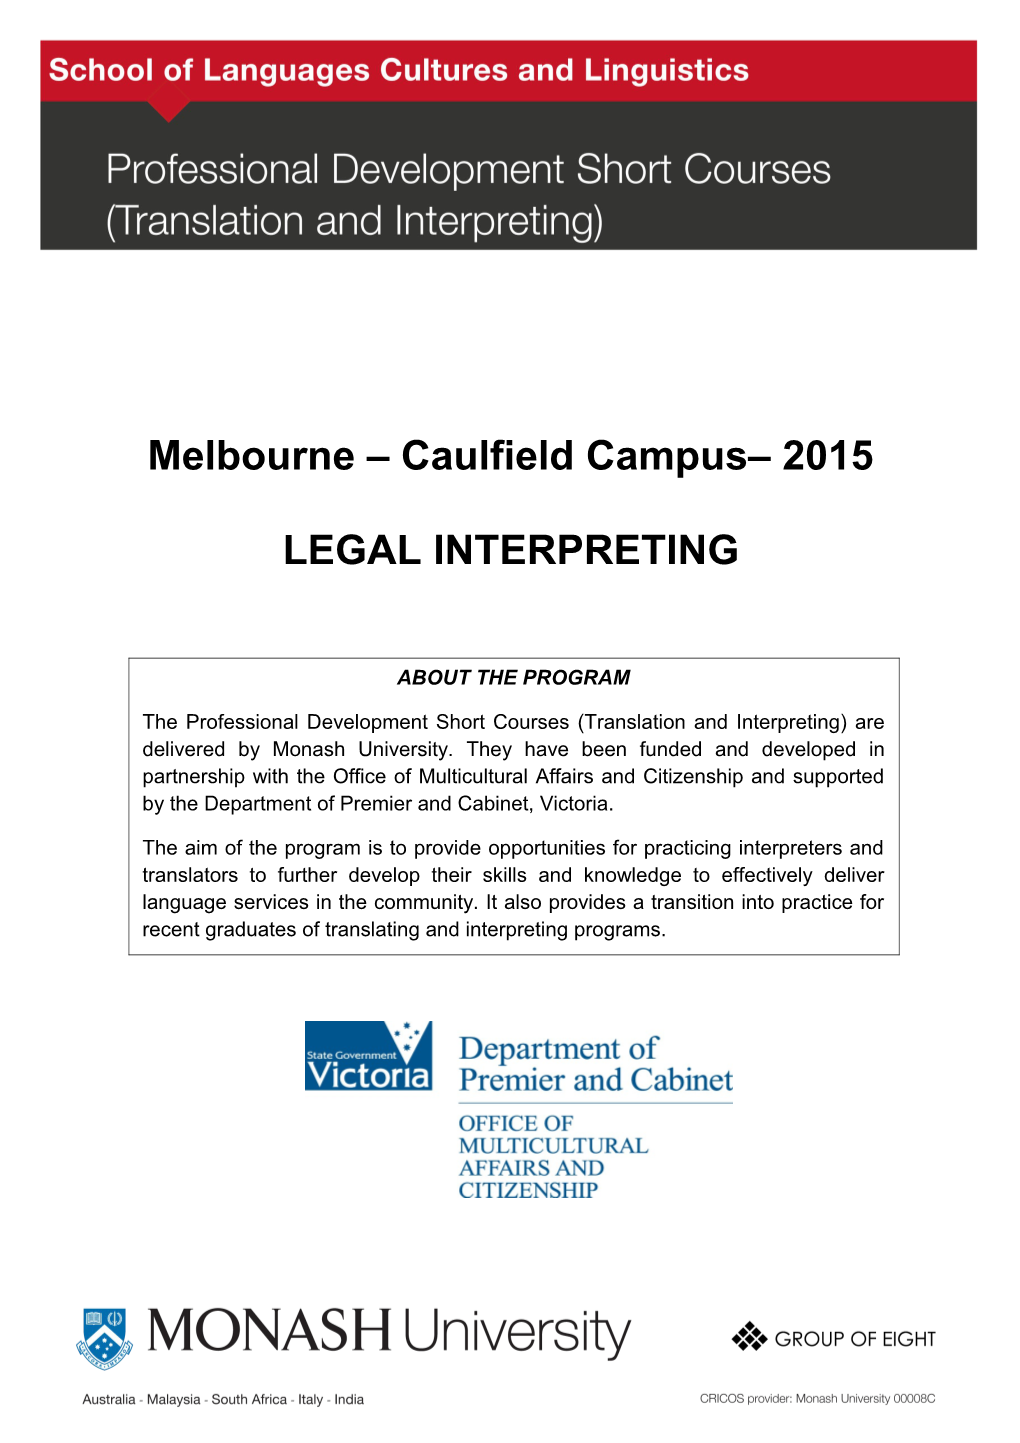 Melbourne Caulfield Campus 2015